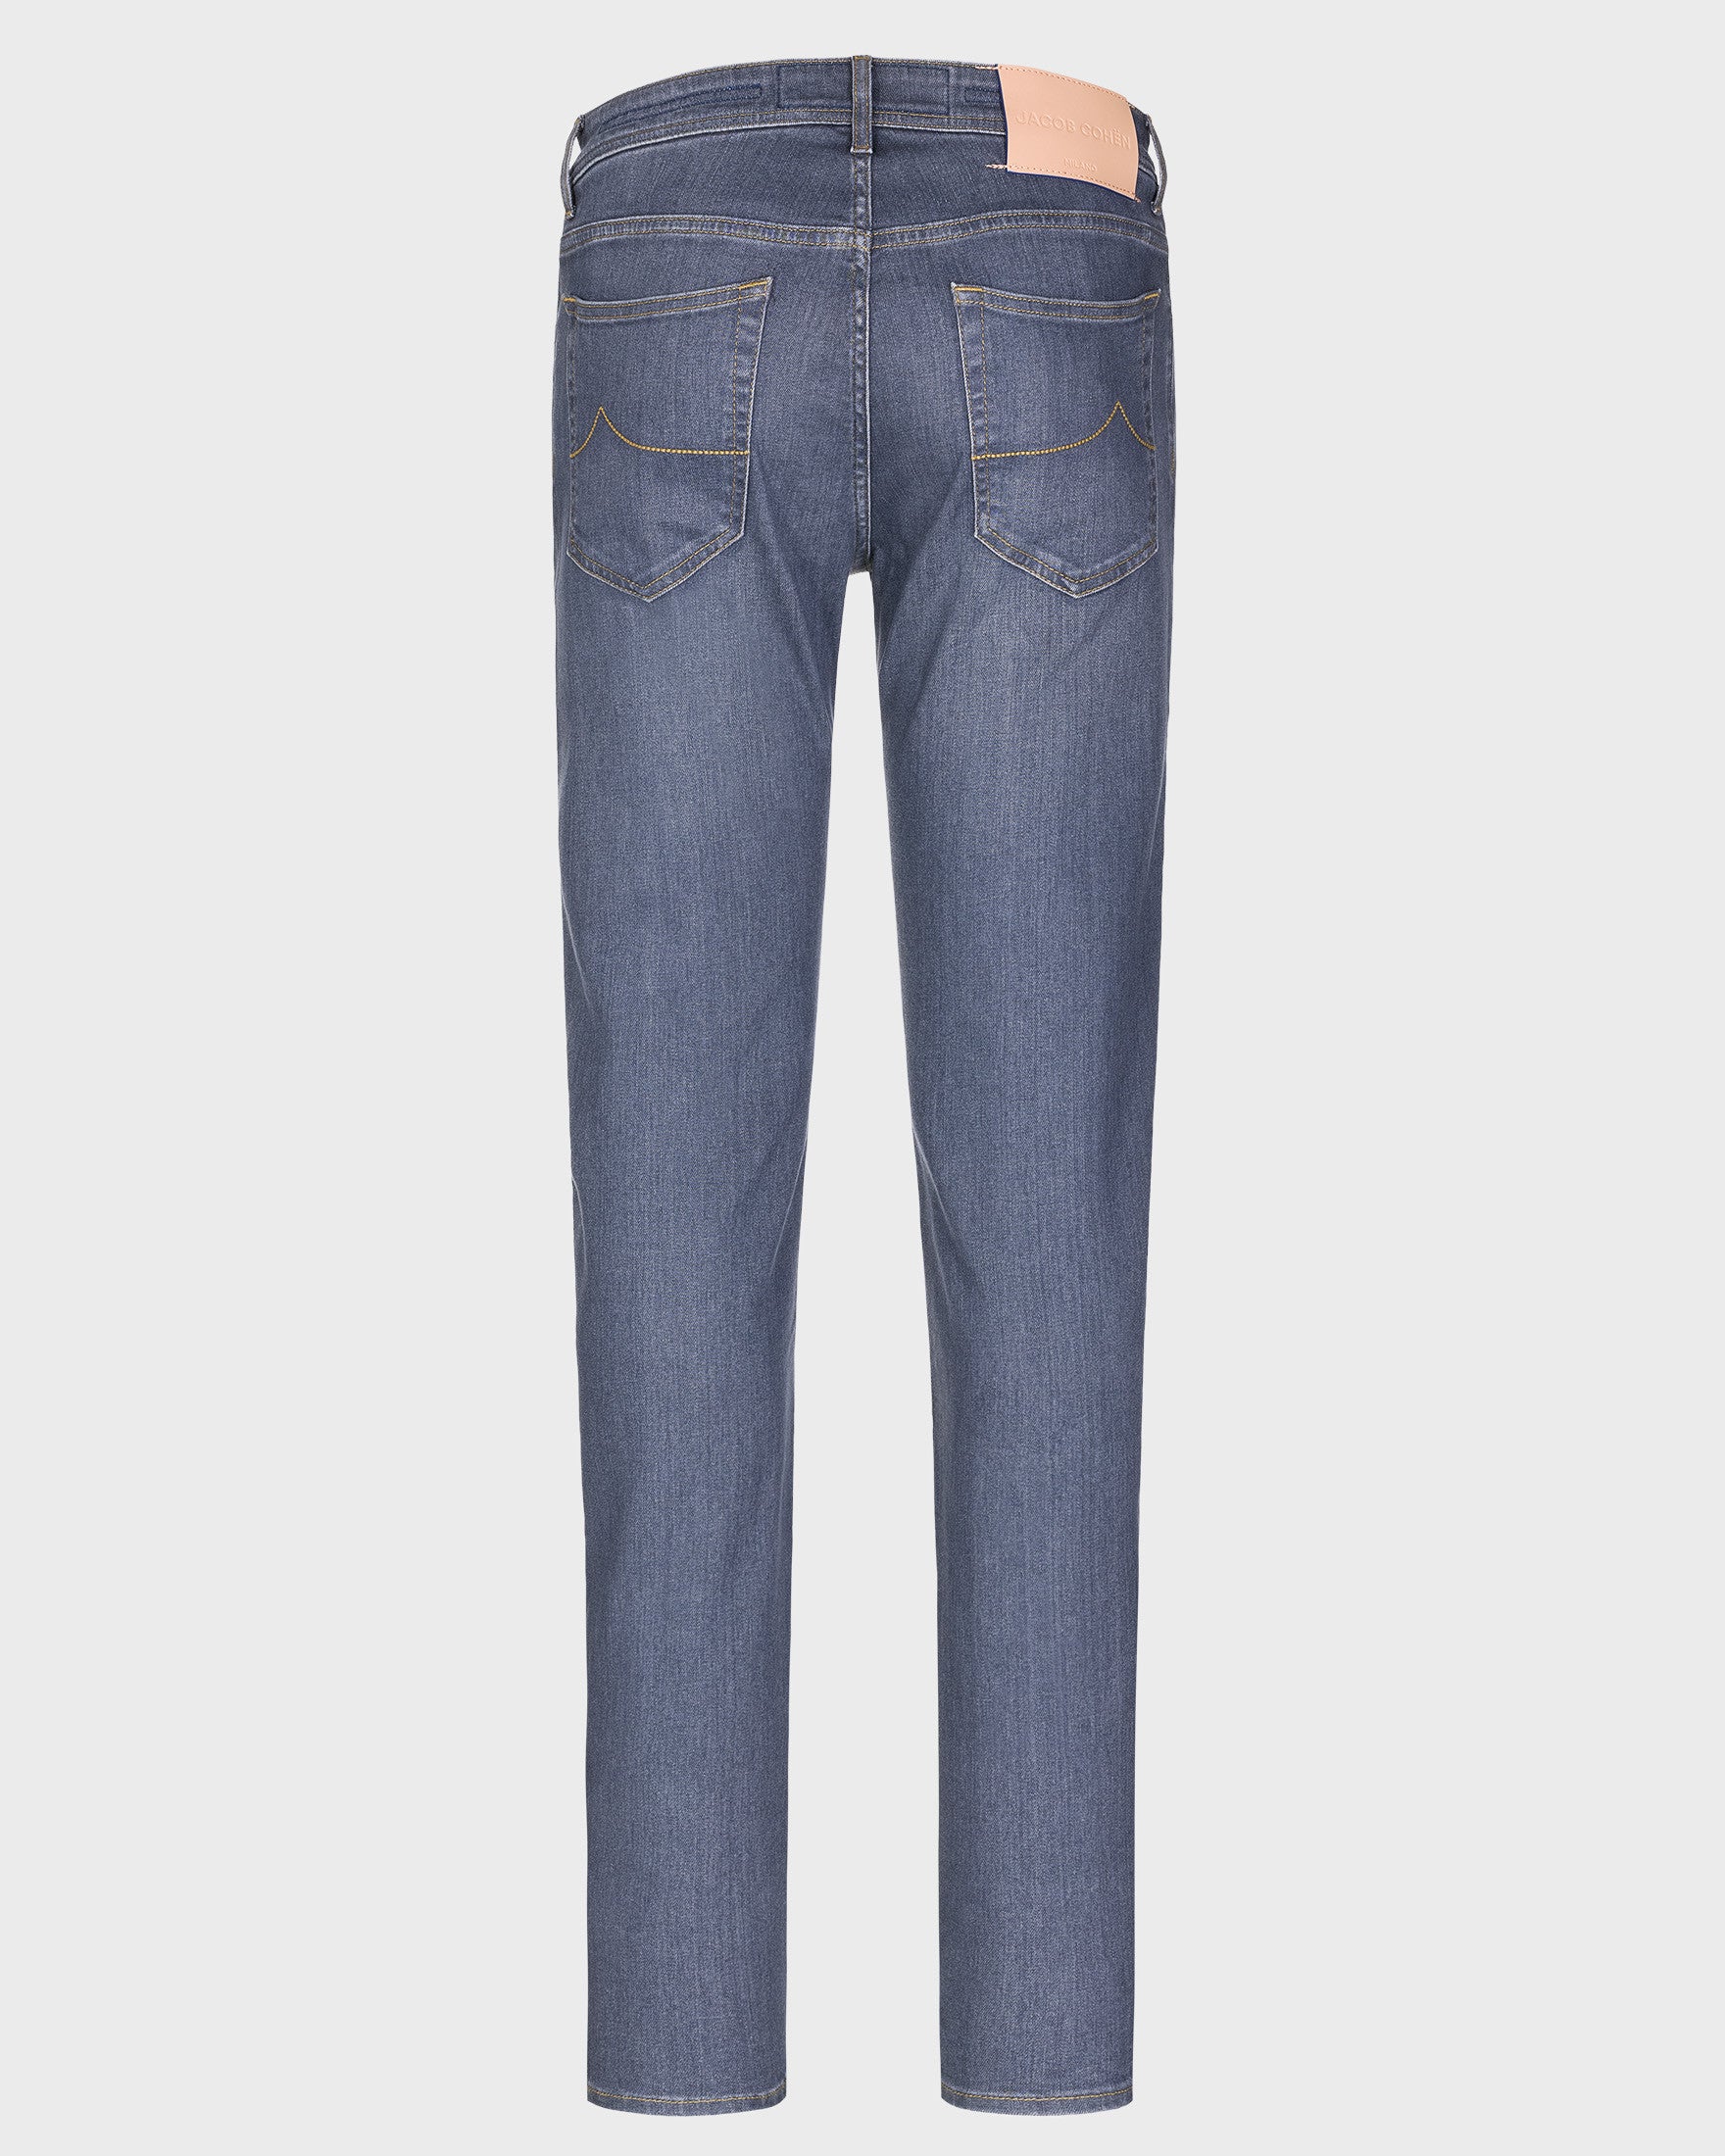 Jeans Bard grey super stretch